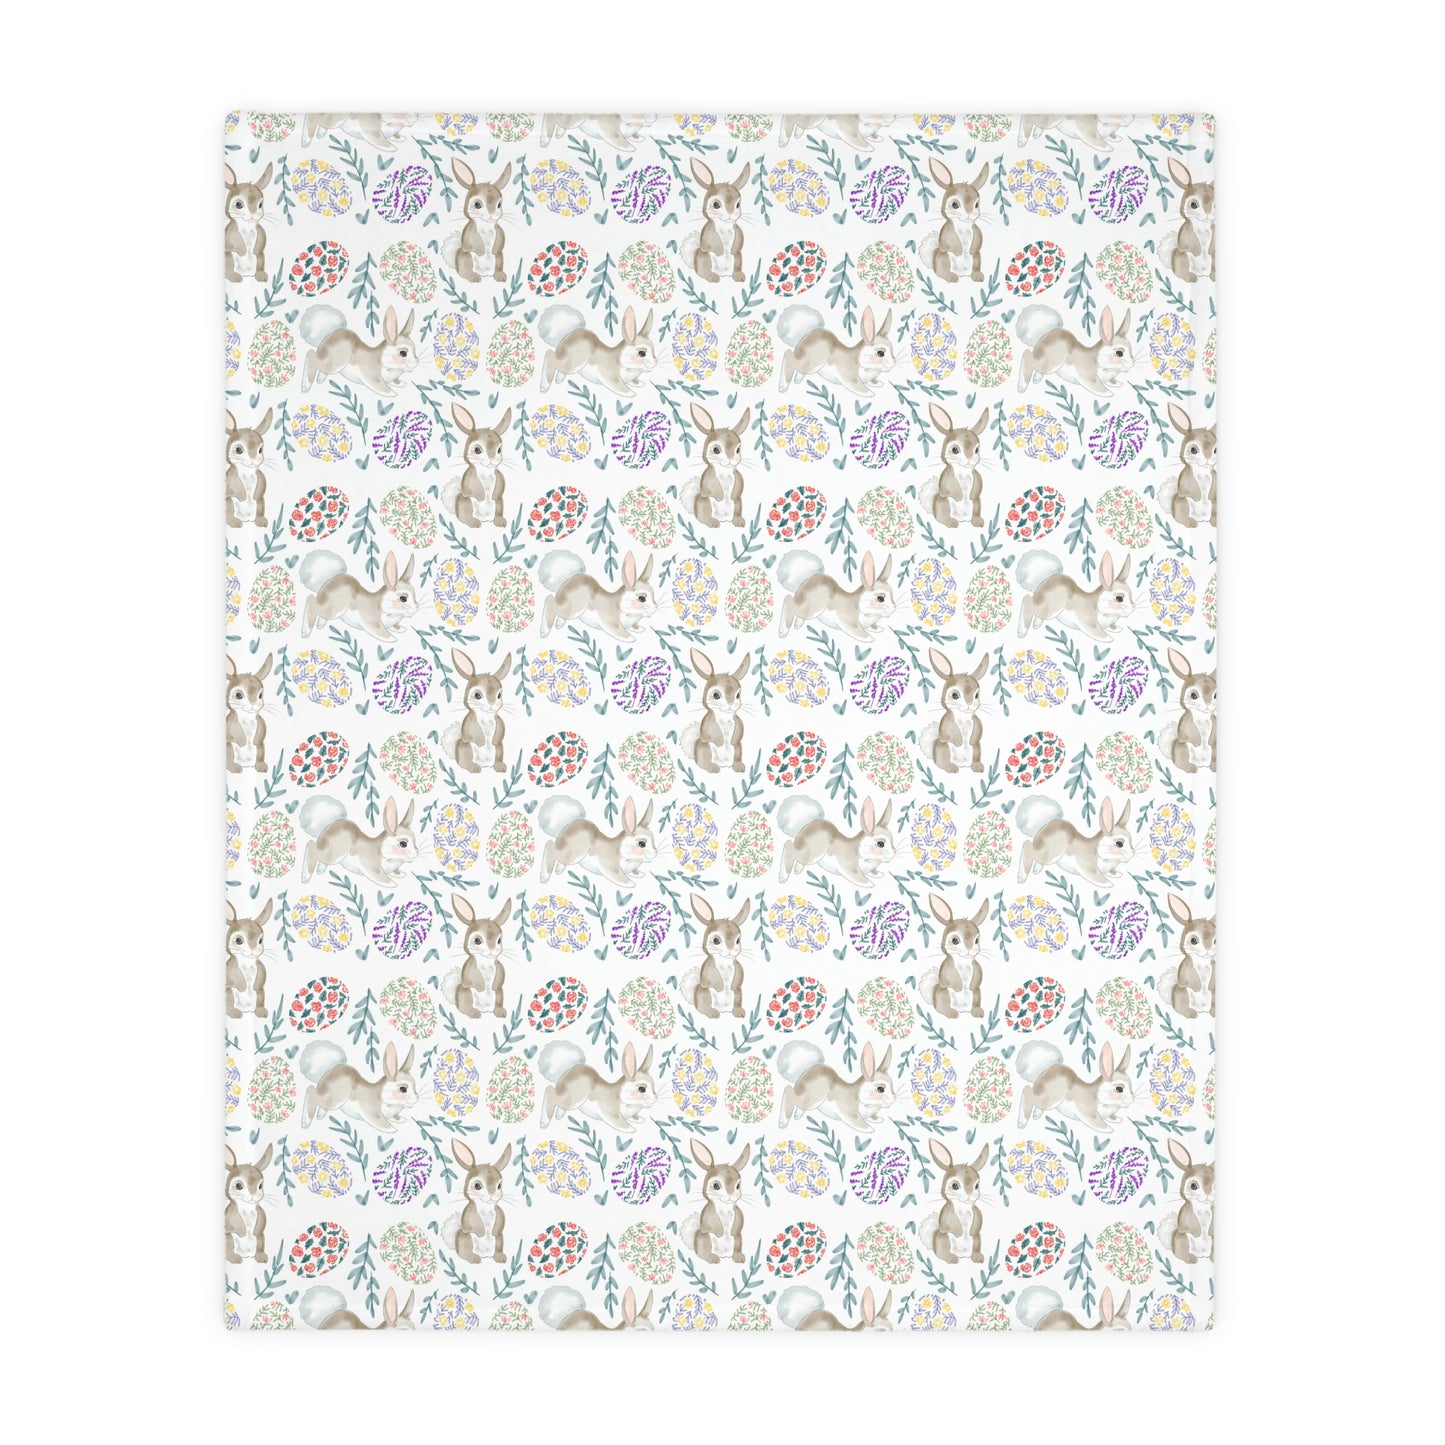 Bunnies and Easter Eggs Velveteen Minky Blanket (Two-sided print)